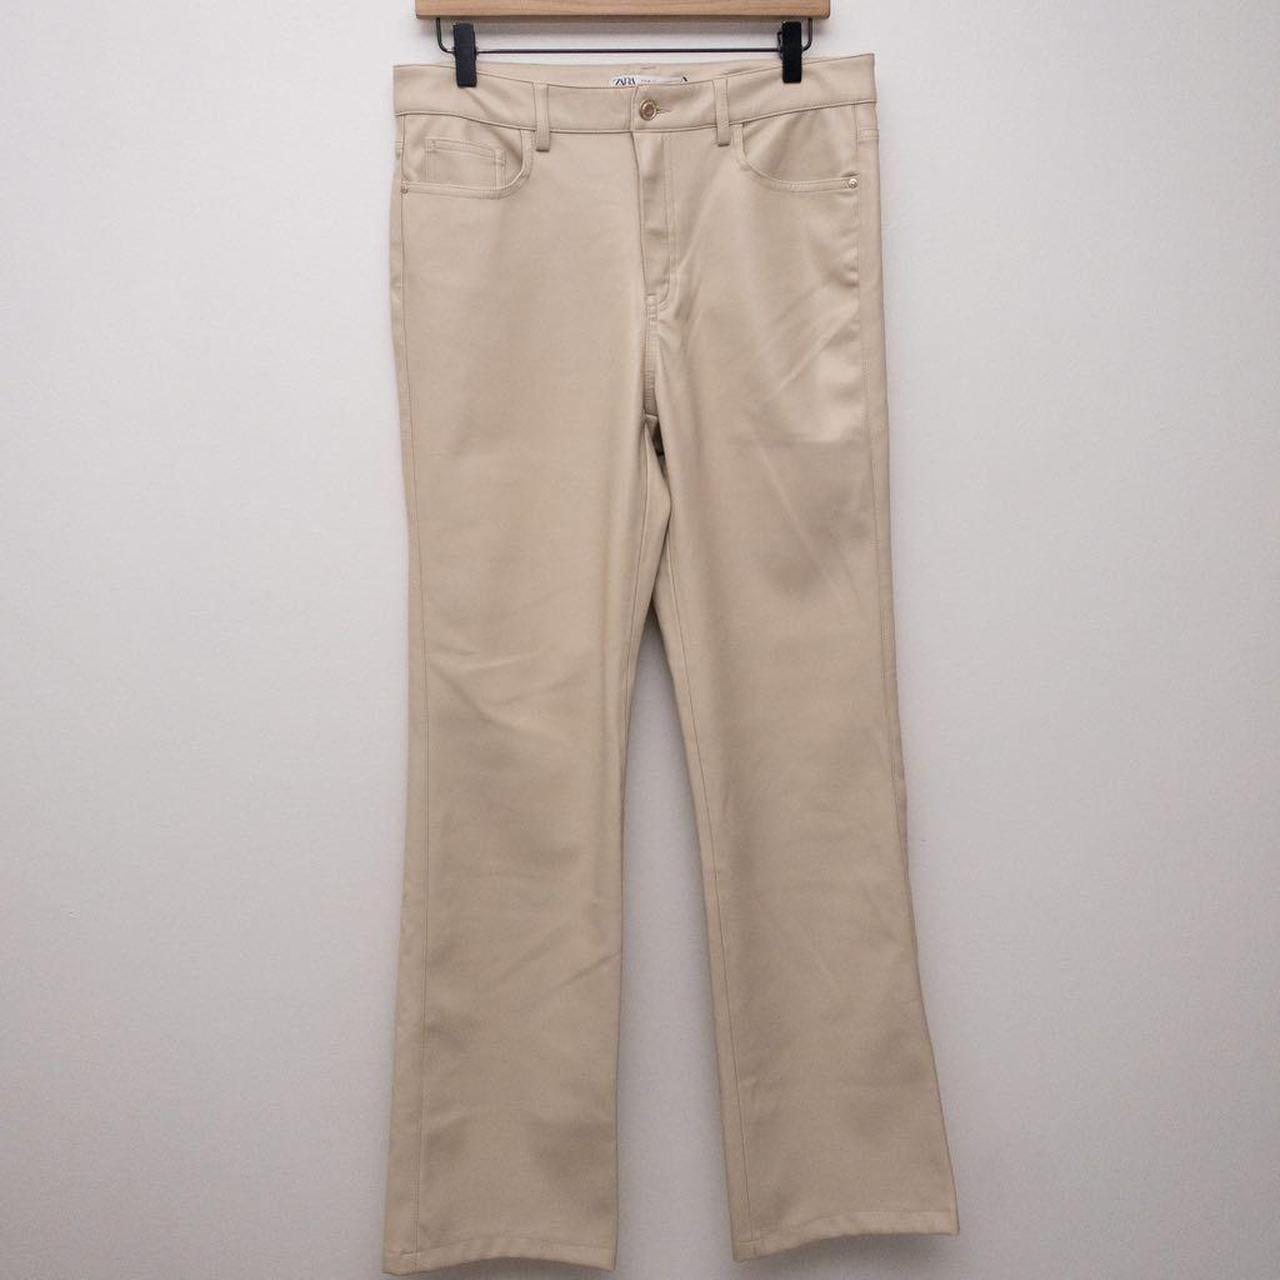 Zara Straight Leg Faux Leather Pants Cream Size 8... - Depop